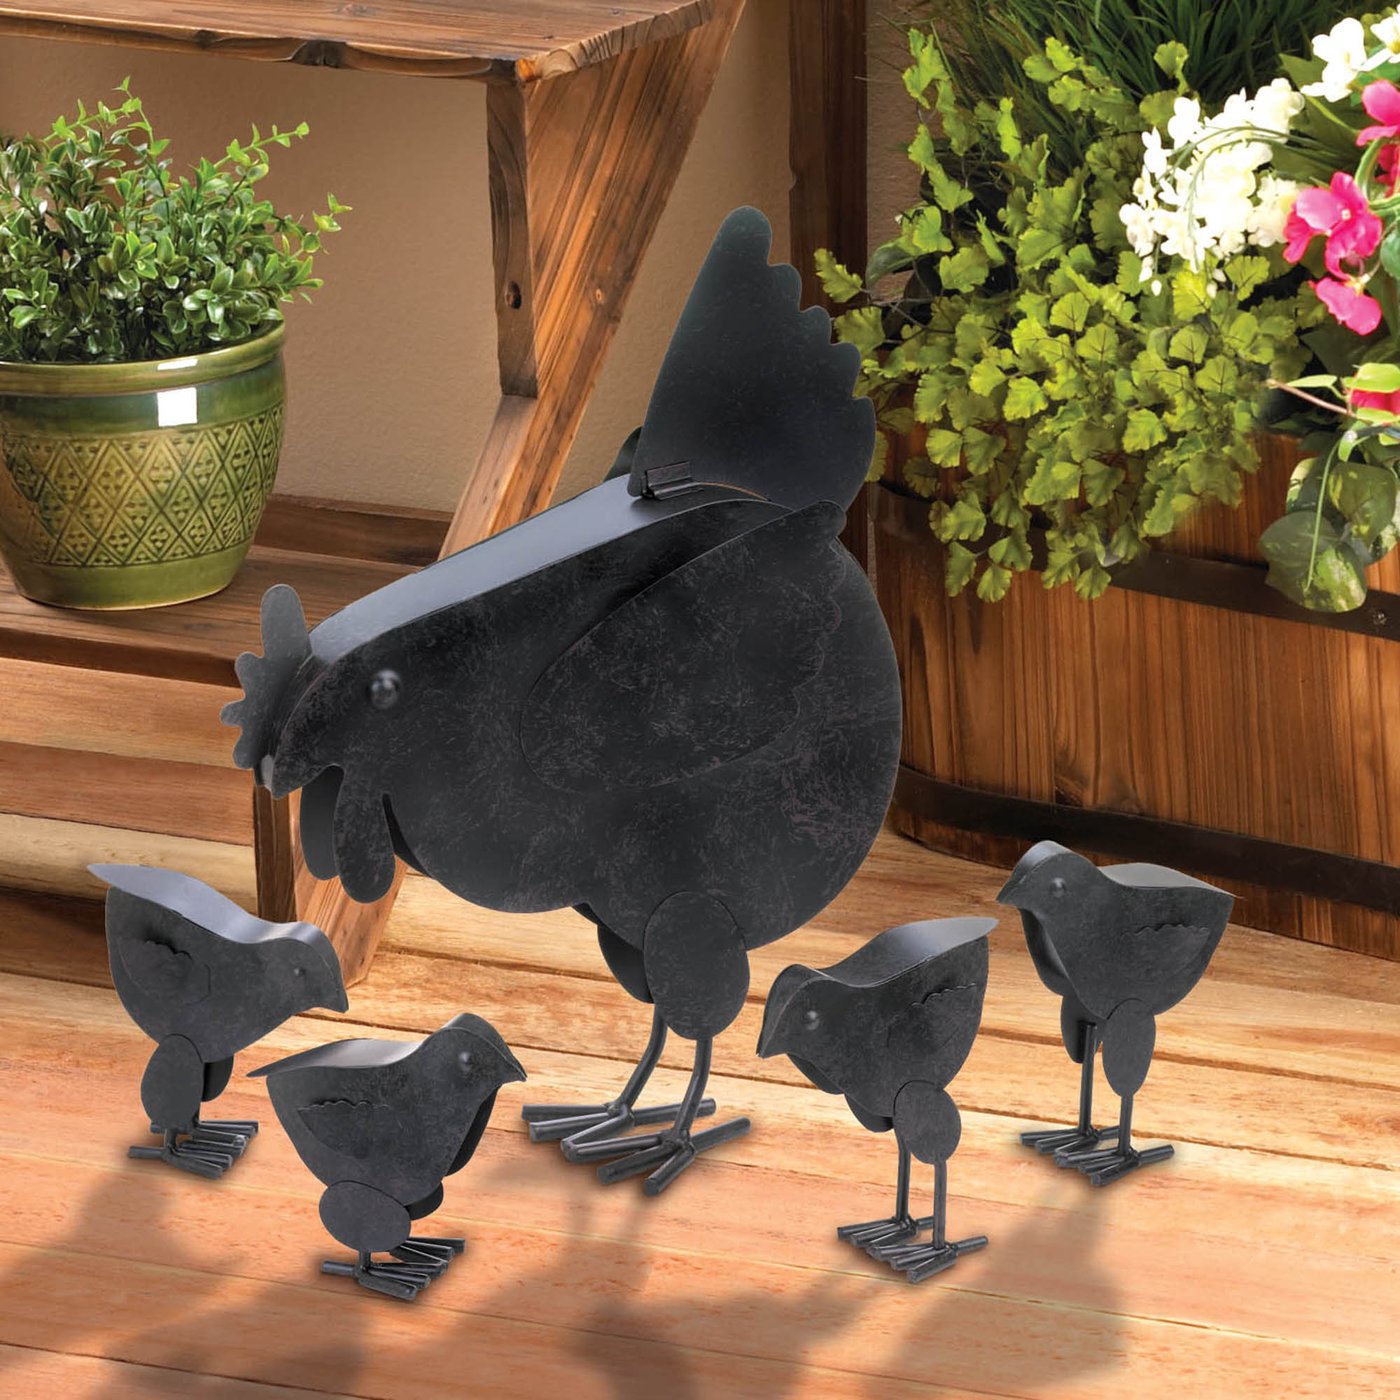 Hen with Chicks Country Garden Sculpture